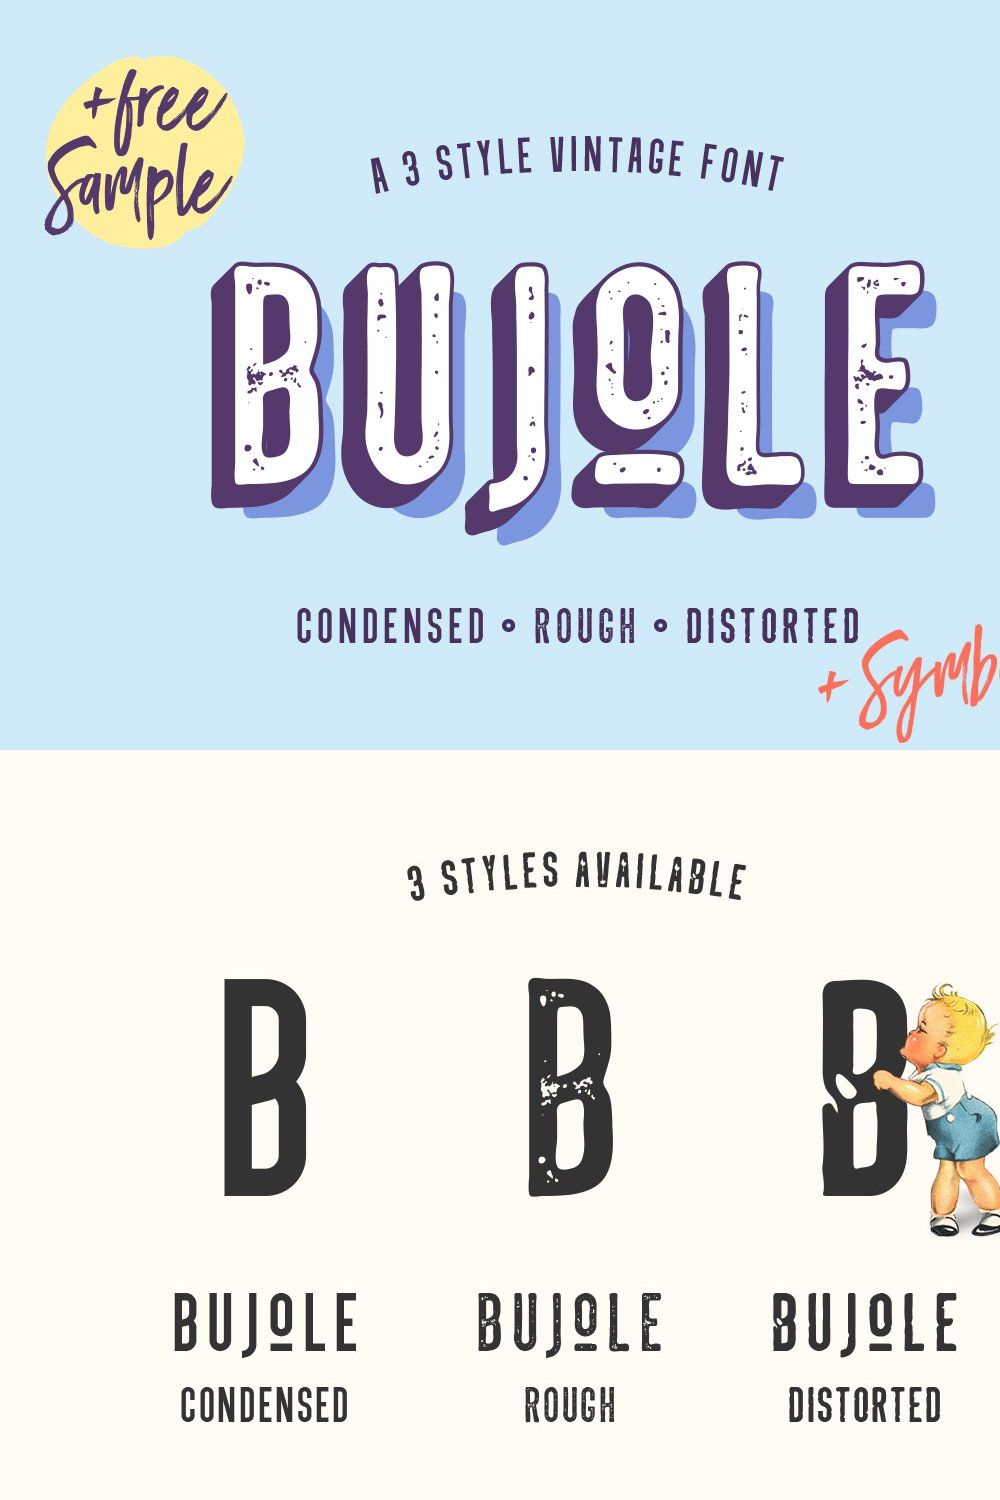 Bujole - A 3 Style Vintage Font pinterest preview image.